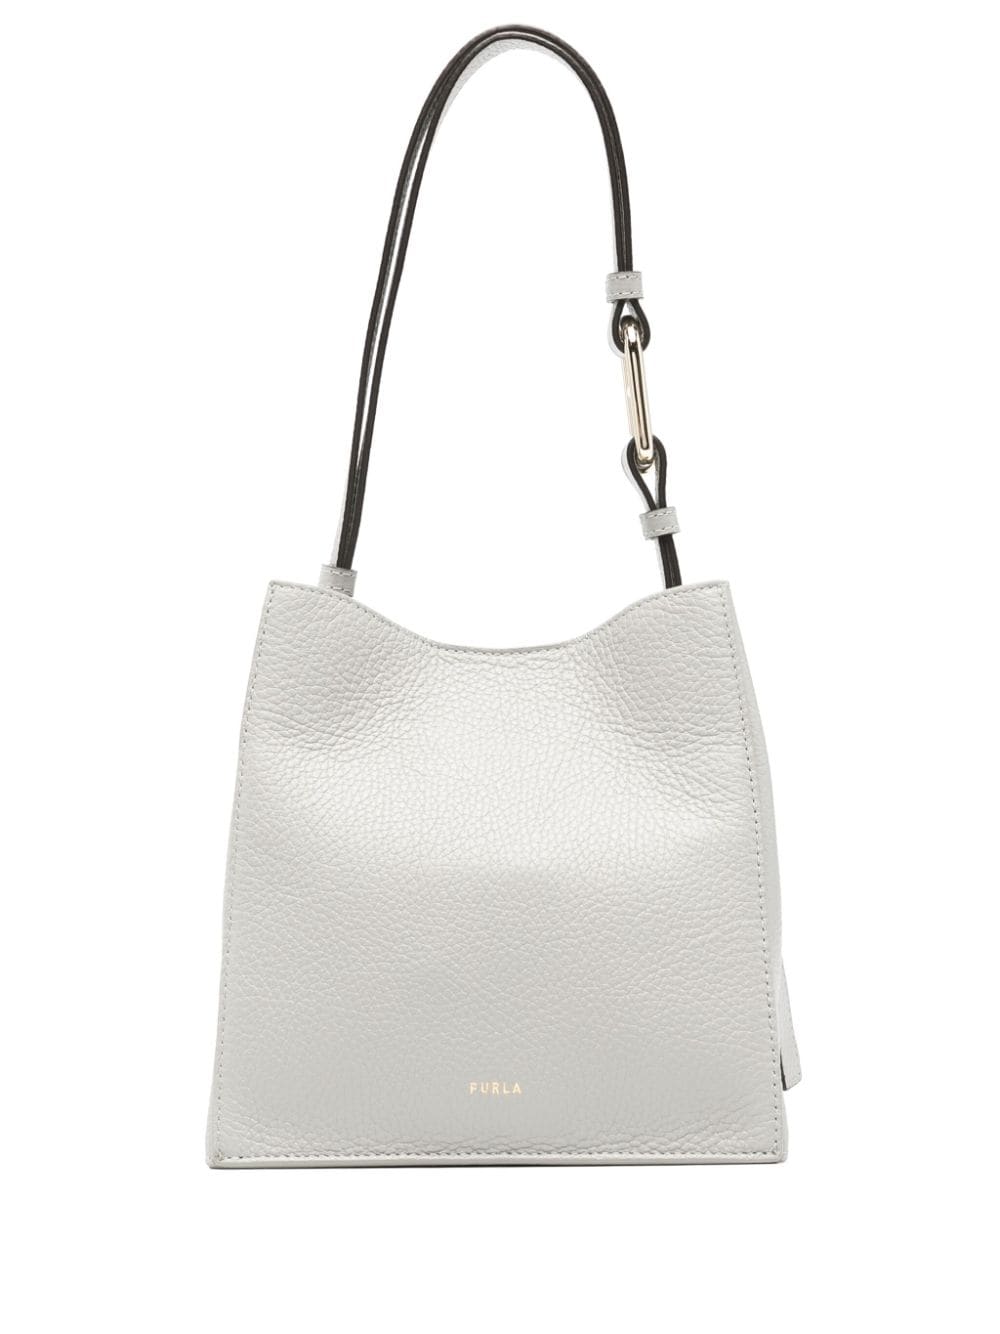 Image 1 of Furla mini Nuvola leather shoulder bag